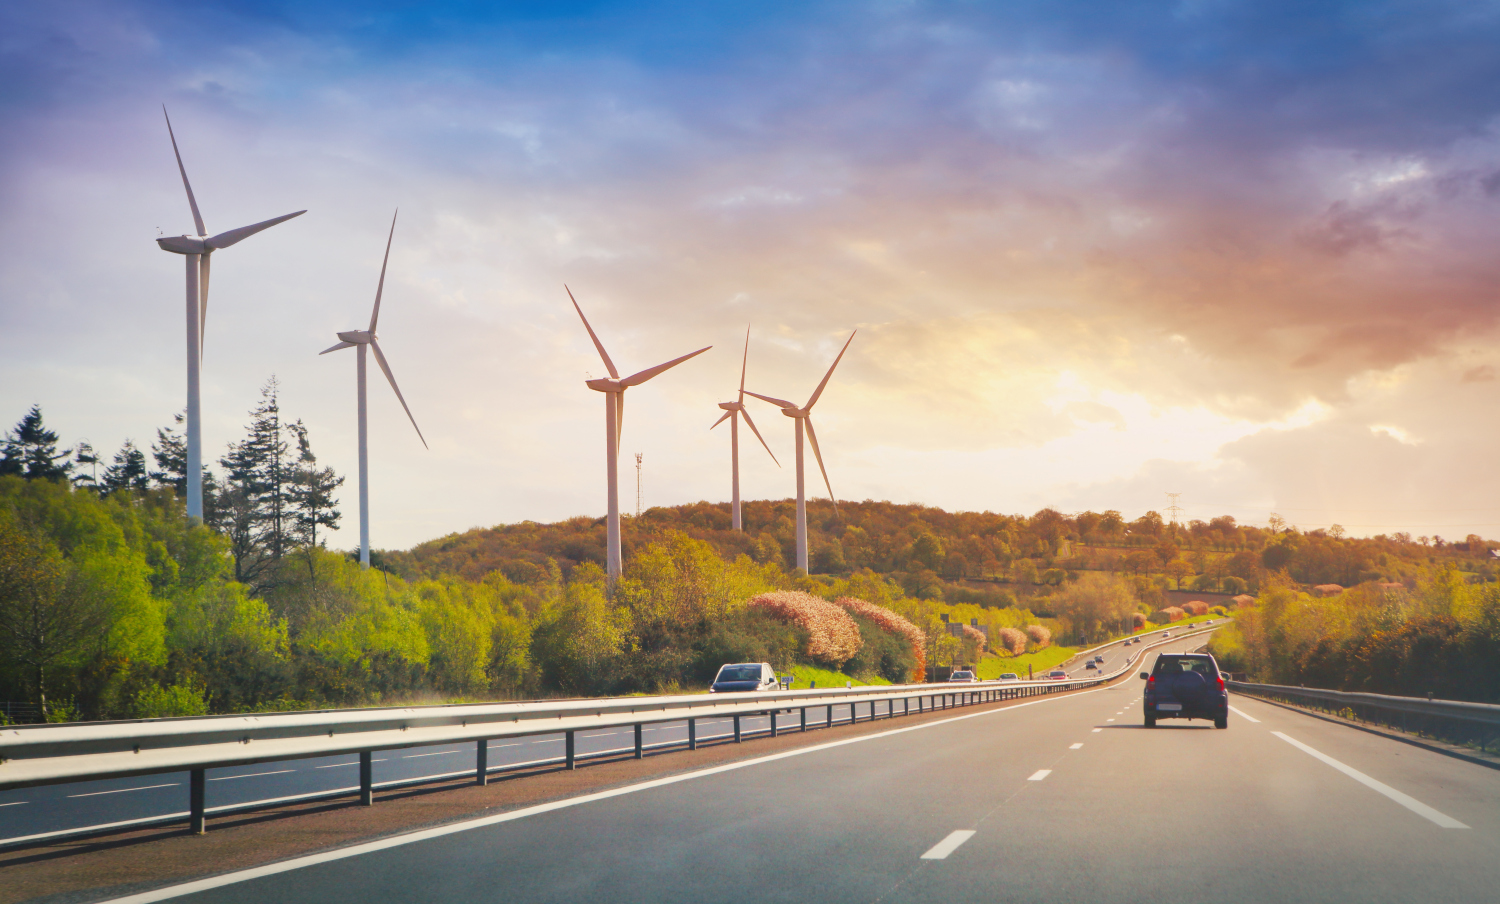 Road and wind turbines